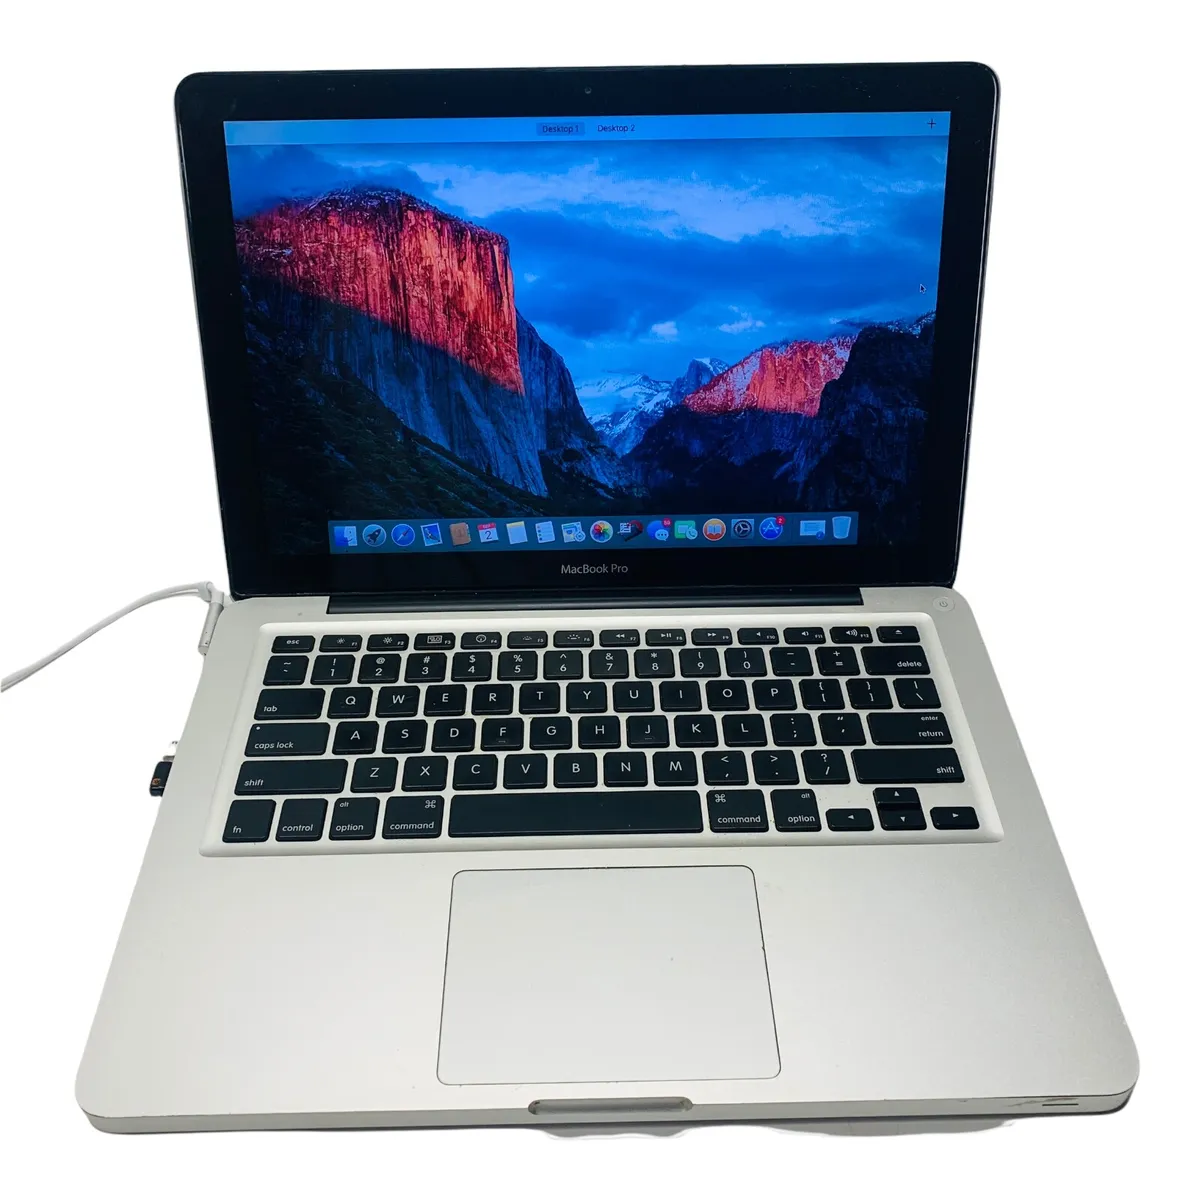 Apple MacBook Pro (13-inch, mid-2009) 2.26 GHz Intel, 250GB SSD